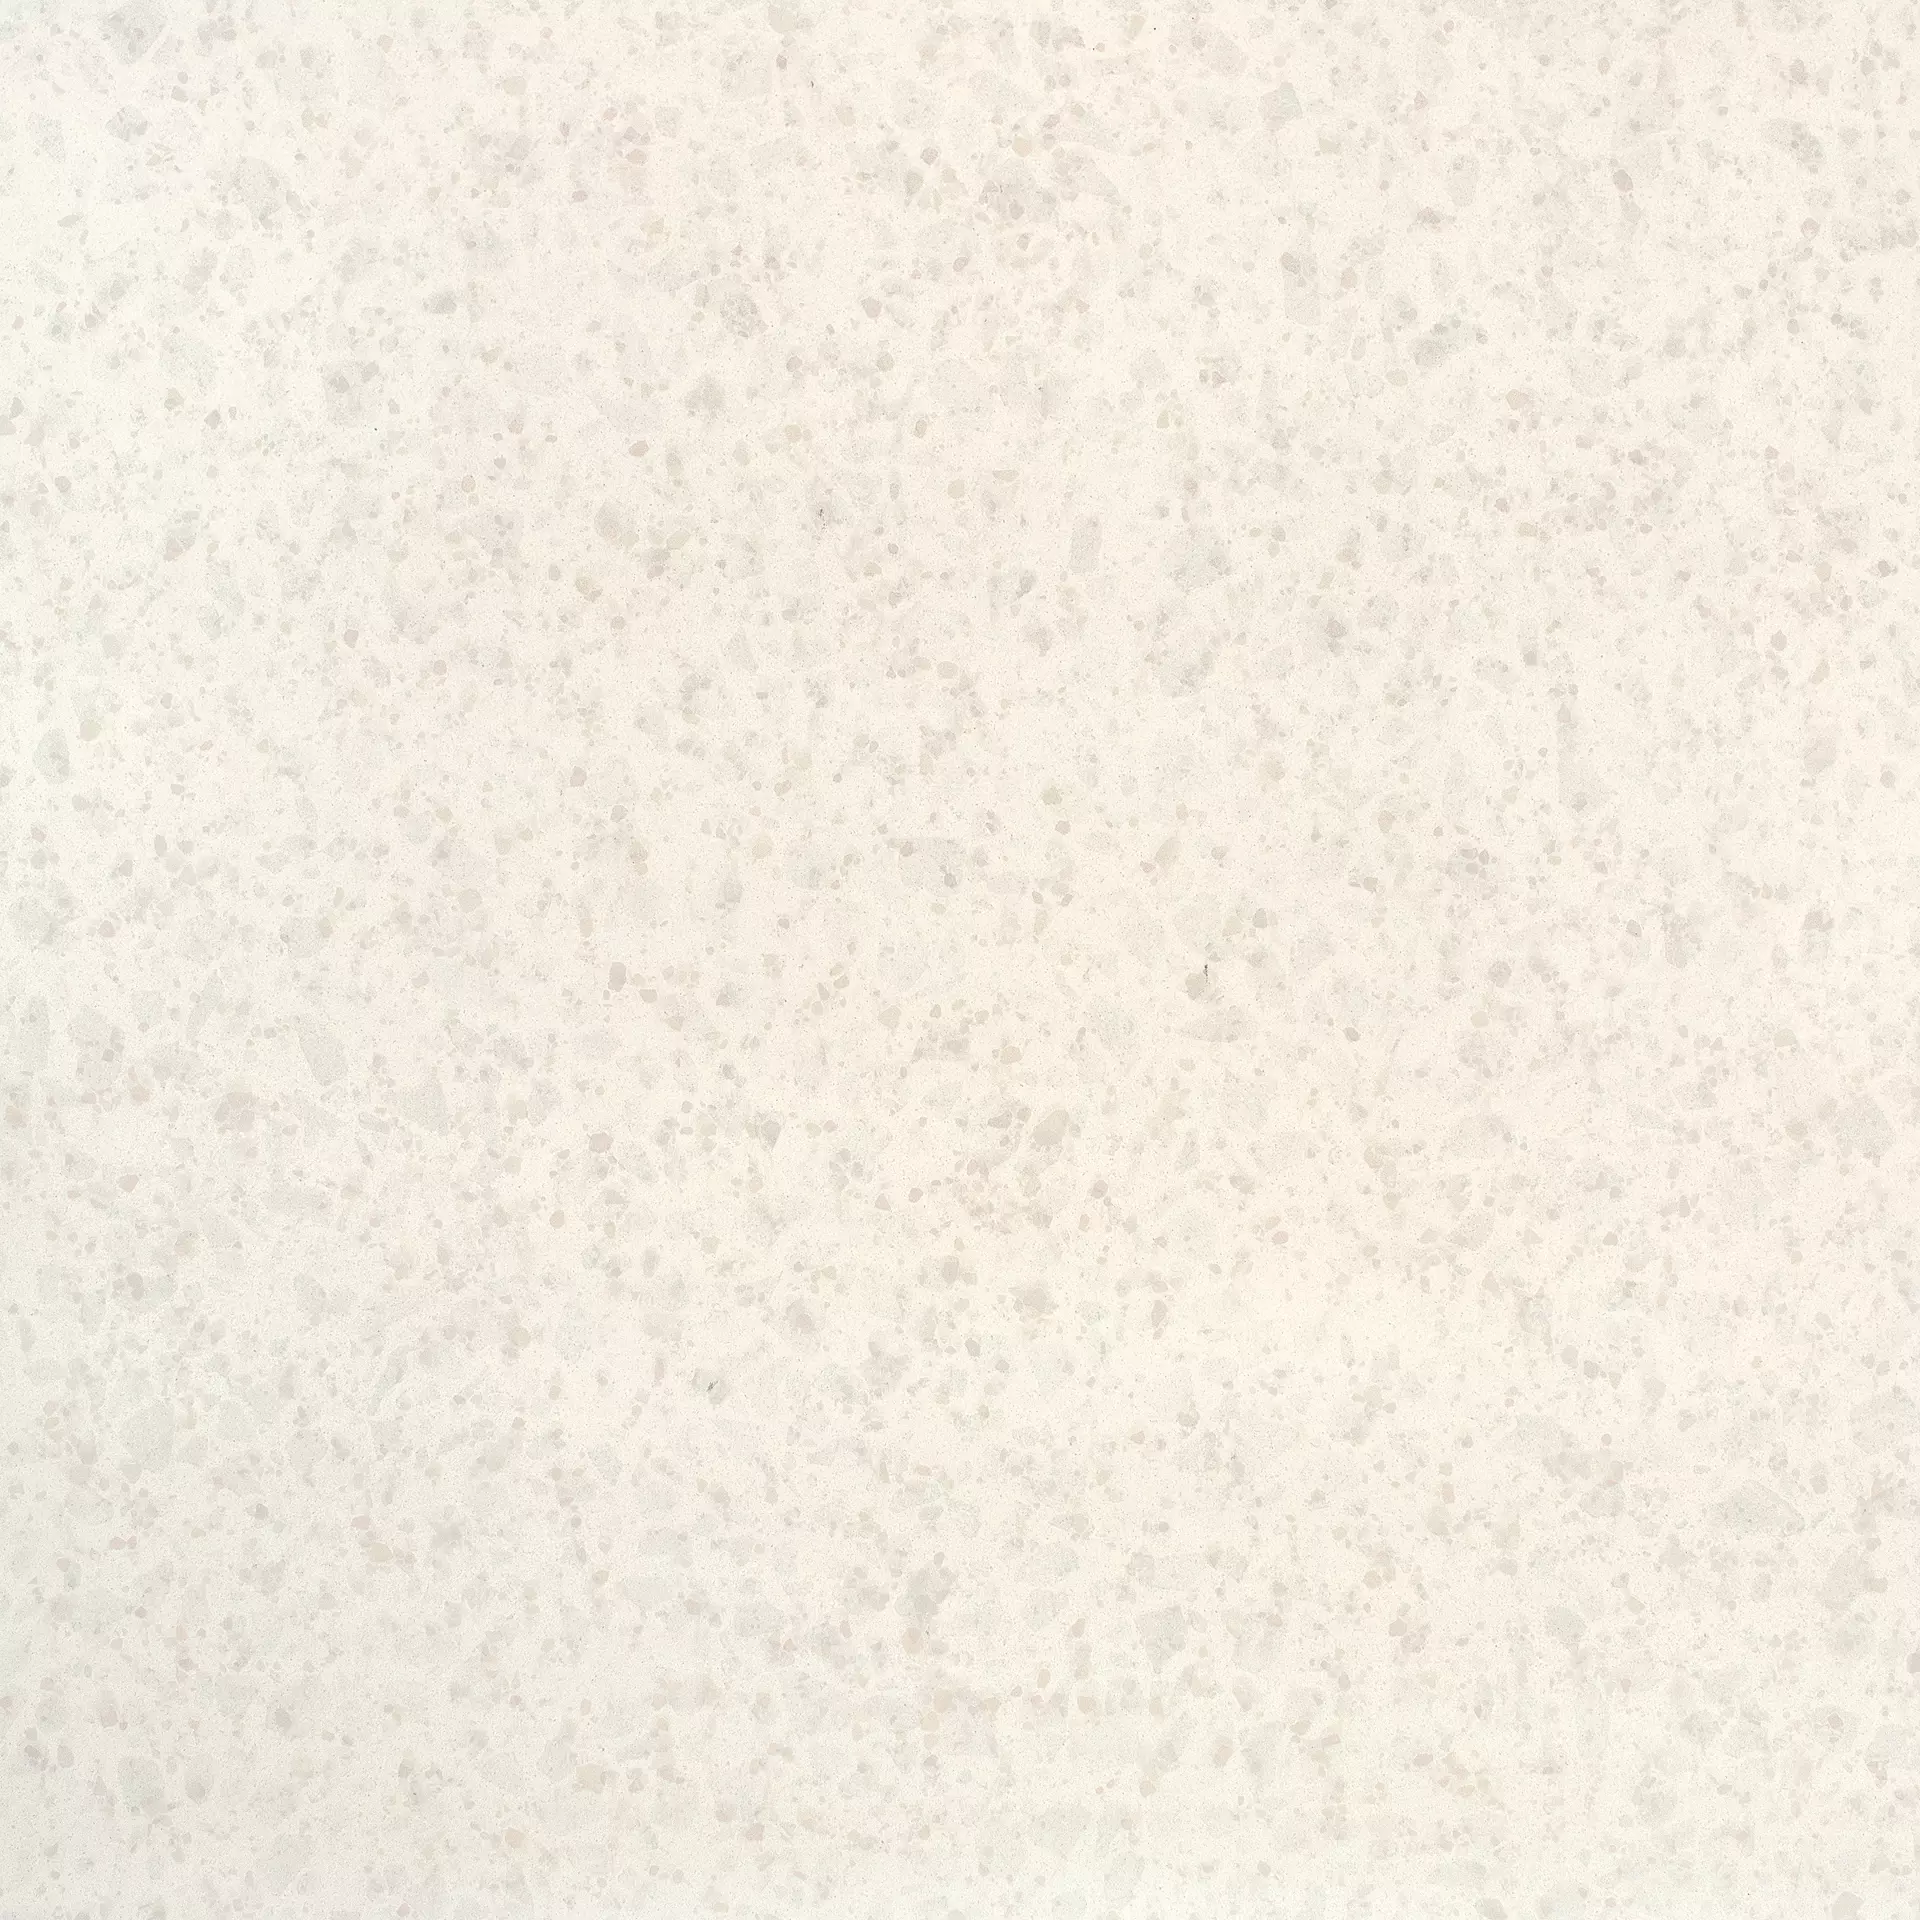 Gigacer Inclusioni Soave Bianco Perla Matt Bianco Perla 12INCL120BIAPERMAT matt 120x120cm 12mm